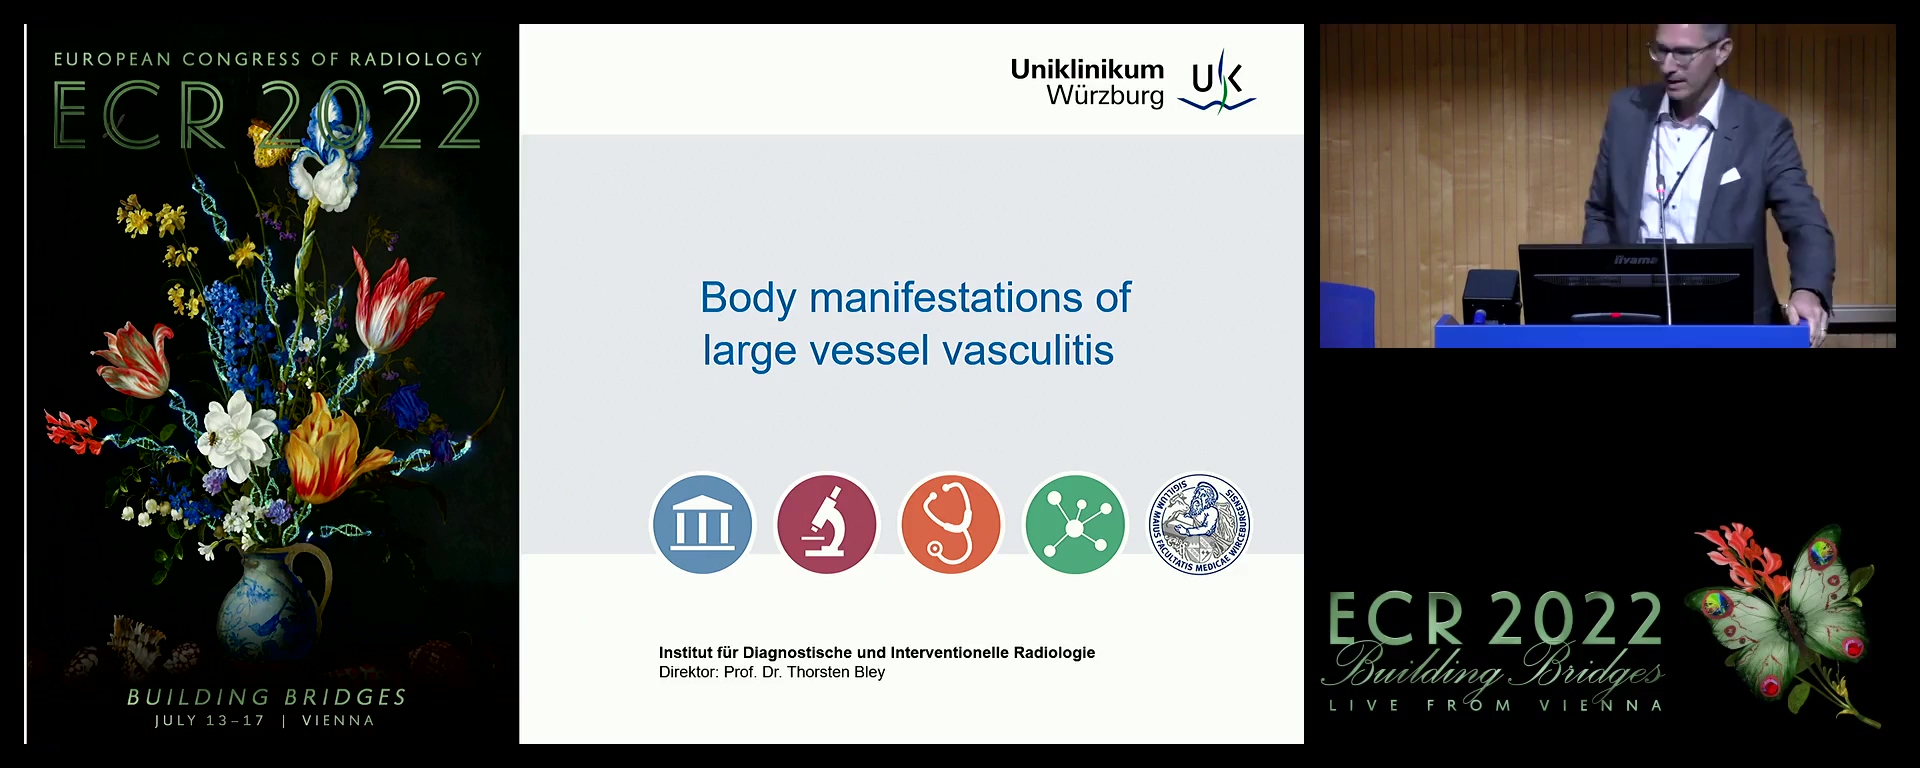 Body manifestations of large vessel vasculitis